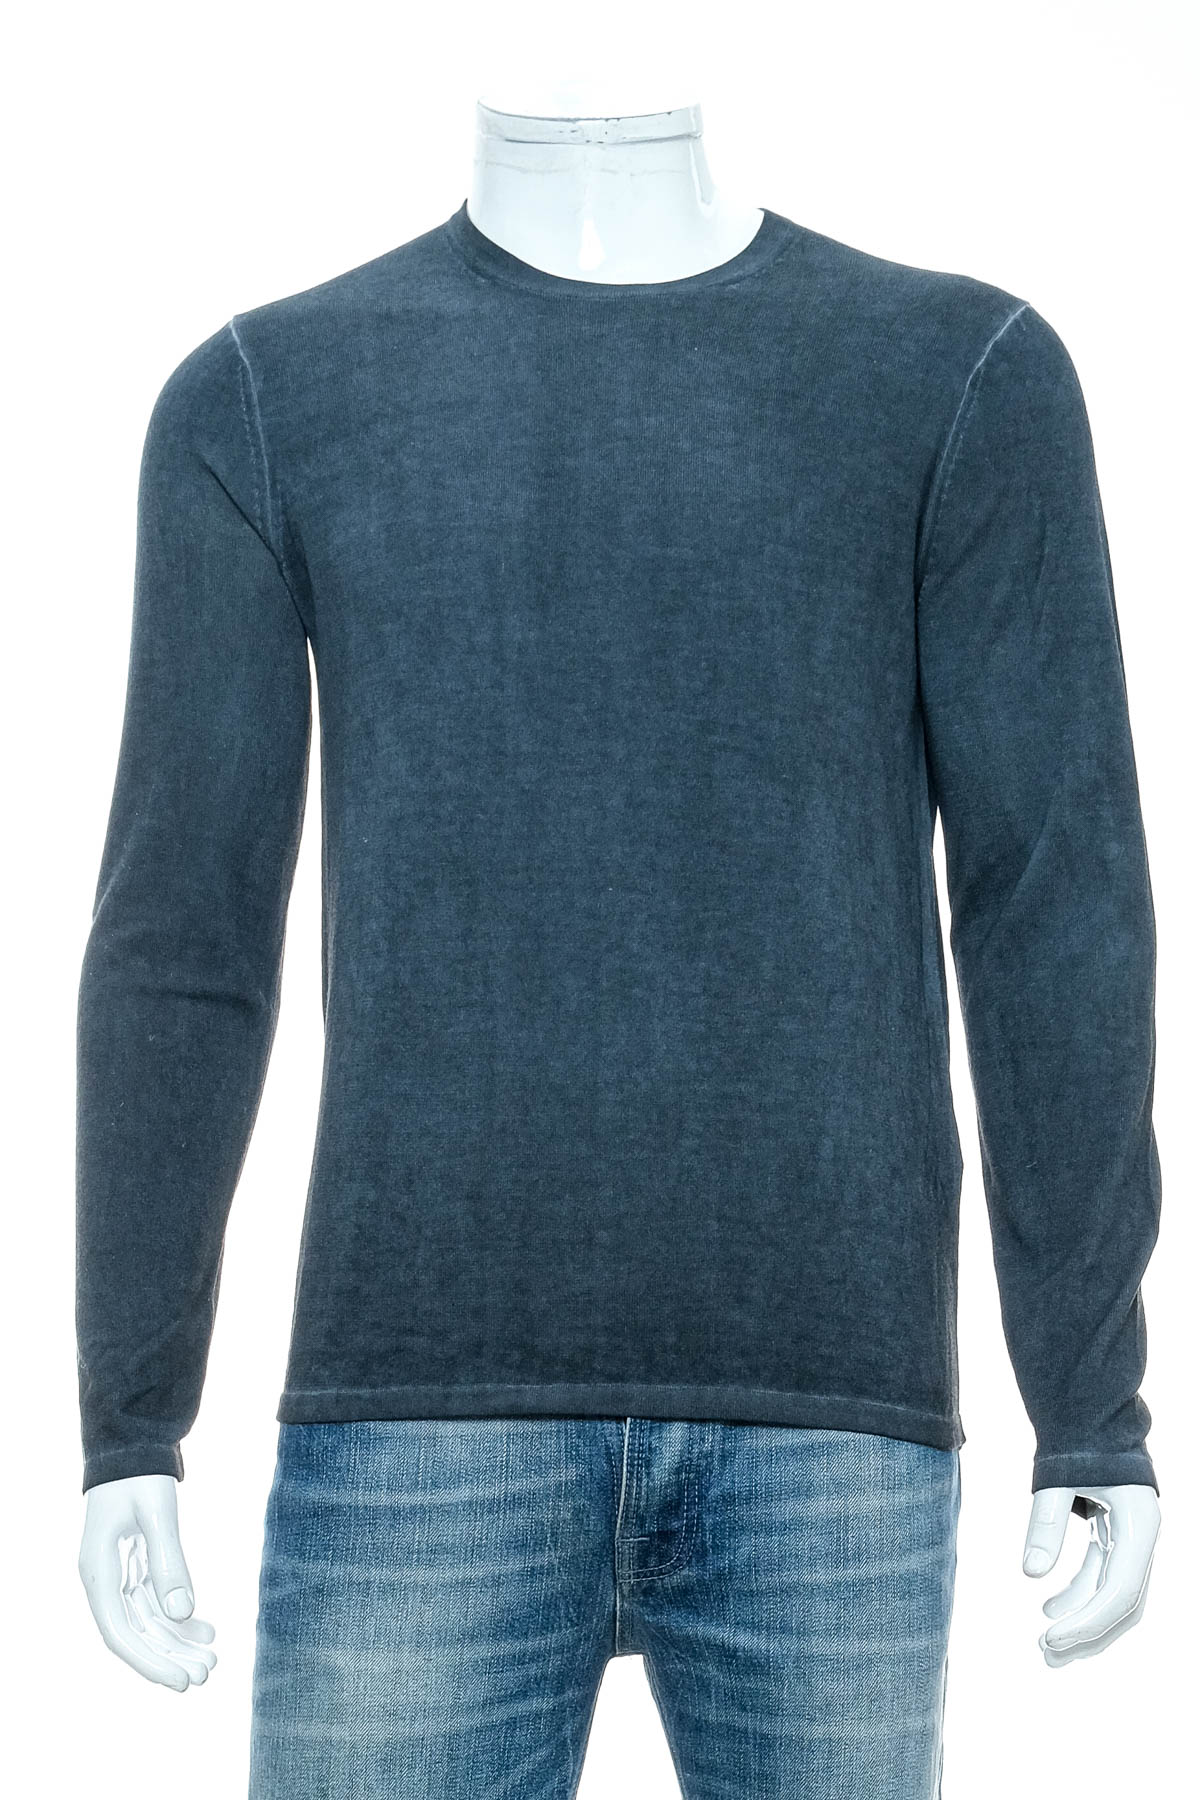 Men's sweater - Michael Kors - 0